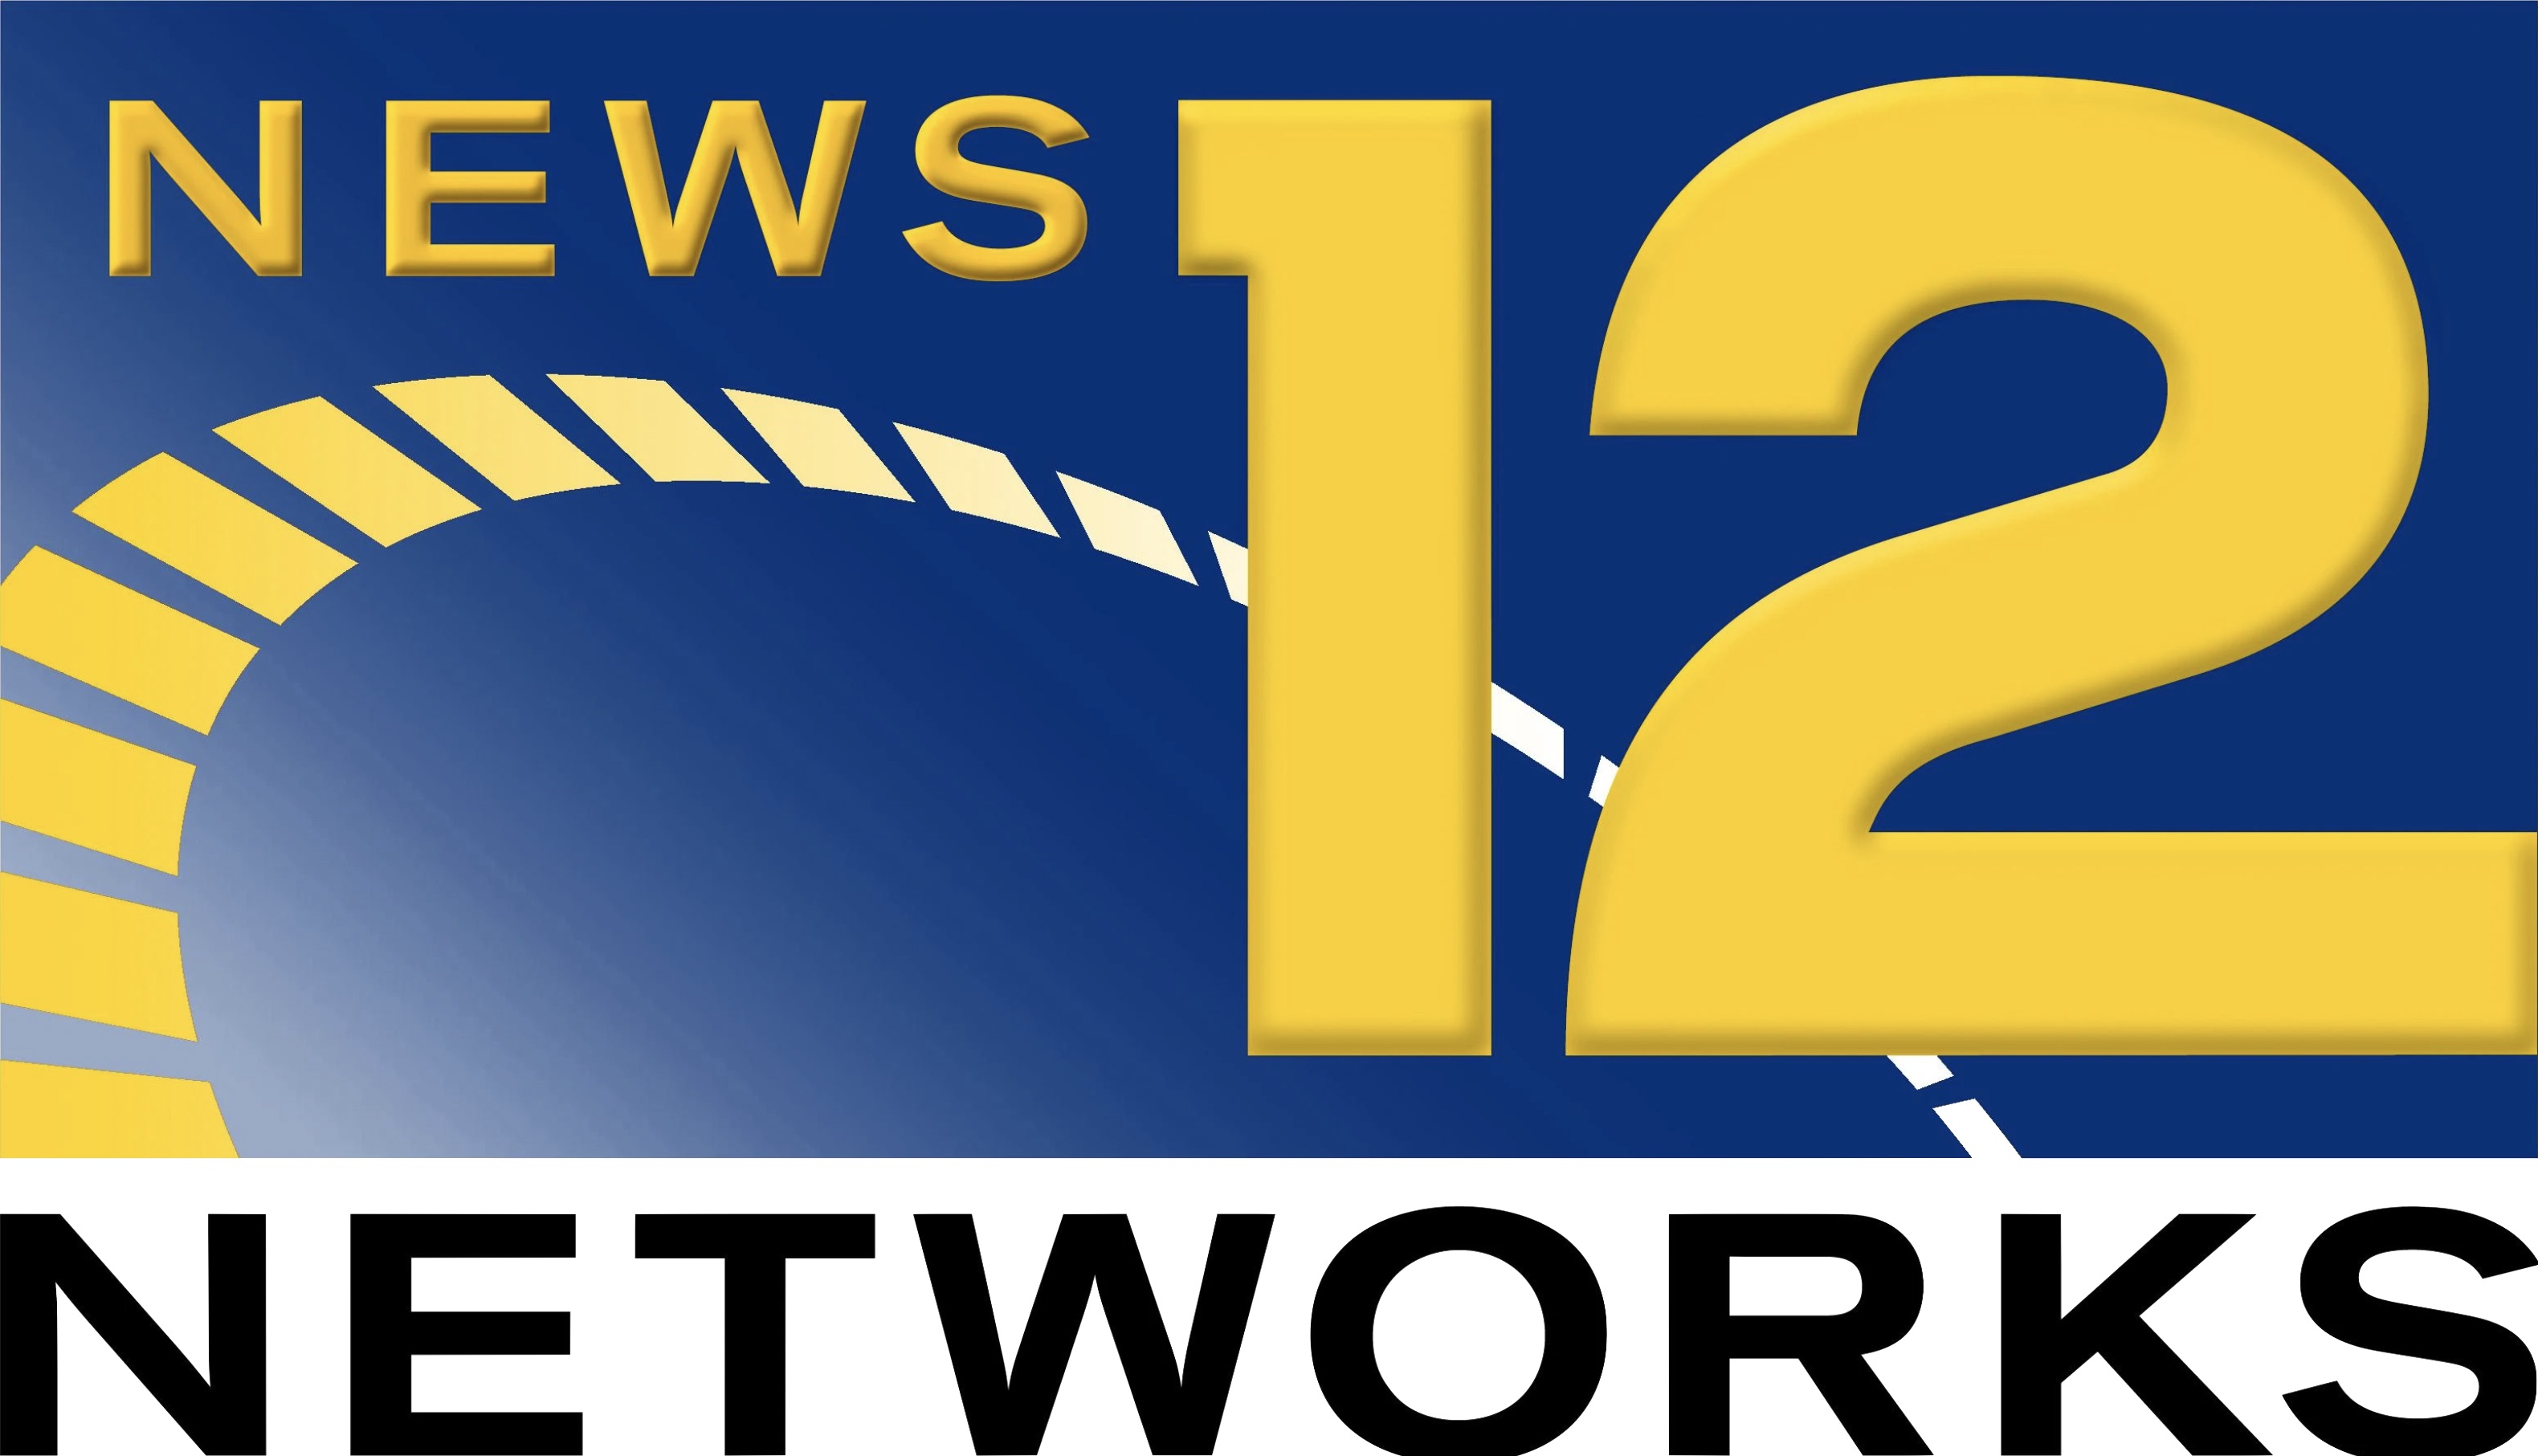 News 12 Networks Logopedia, the logo and branding site